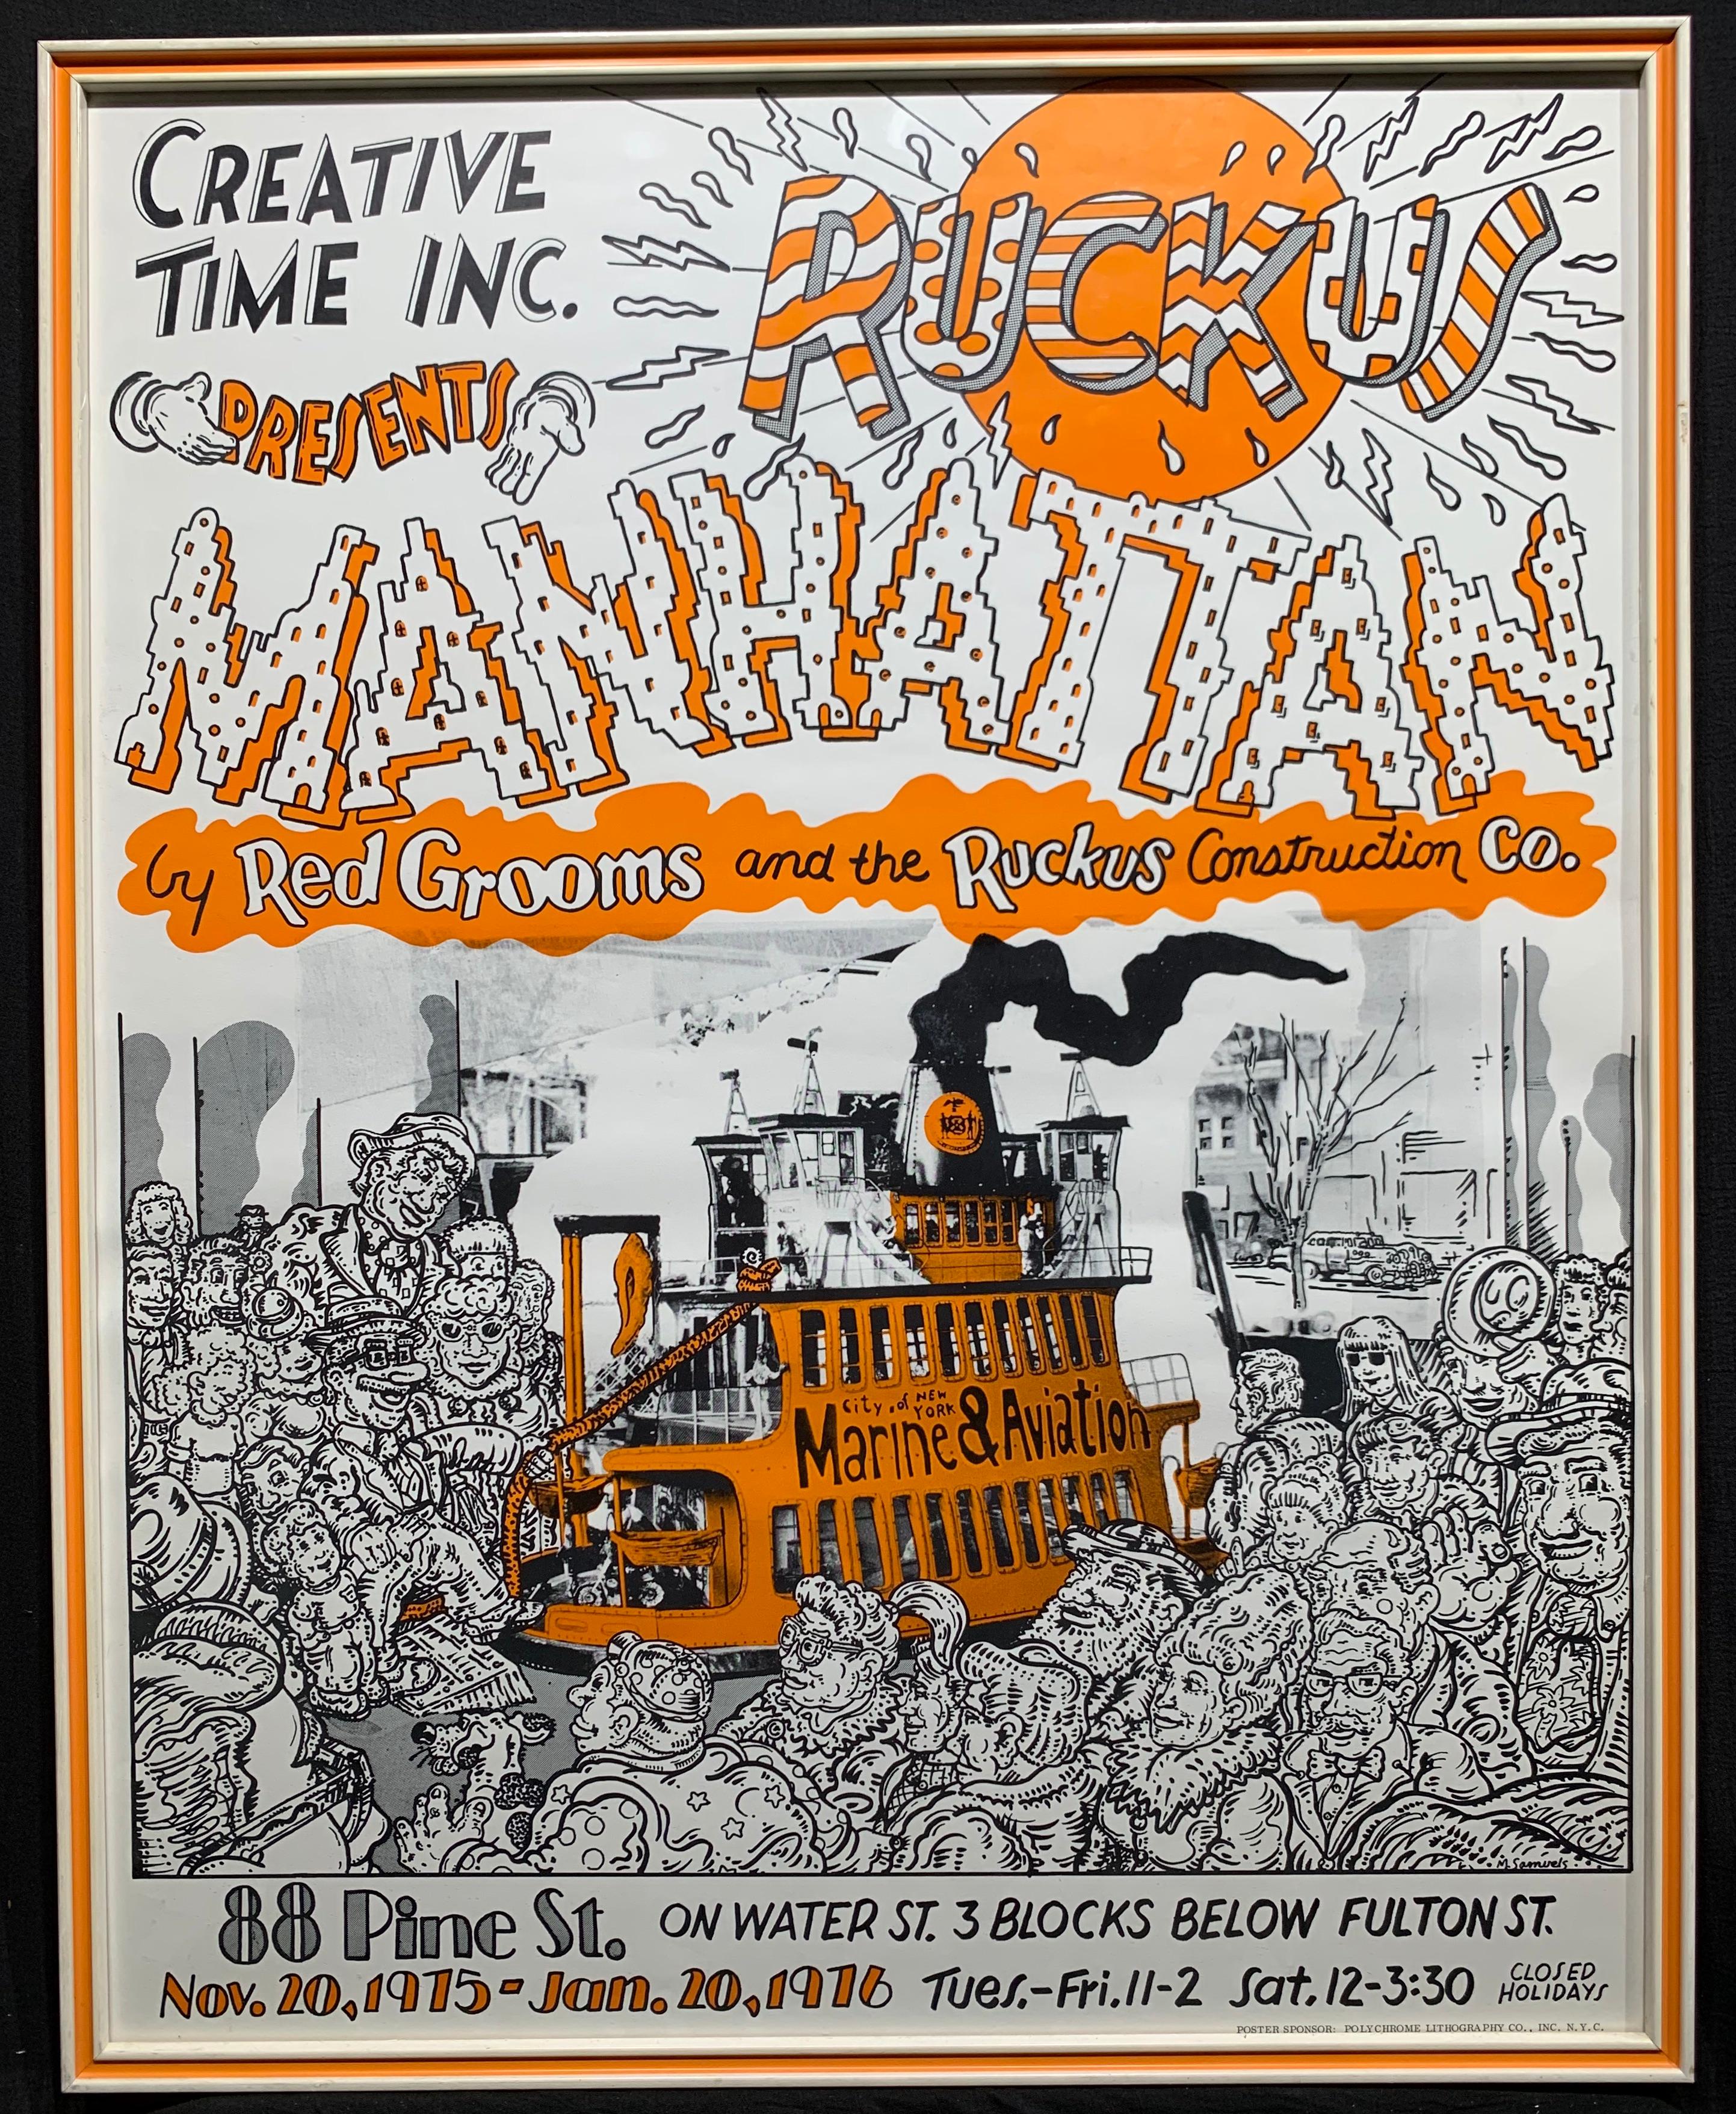 Affiche de l'exposition Creative Time Inc. Red Grooms